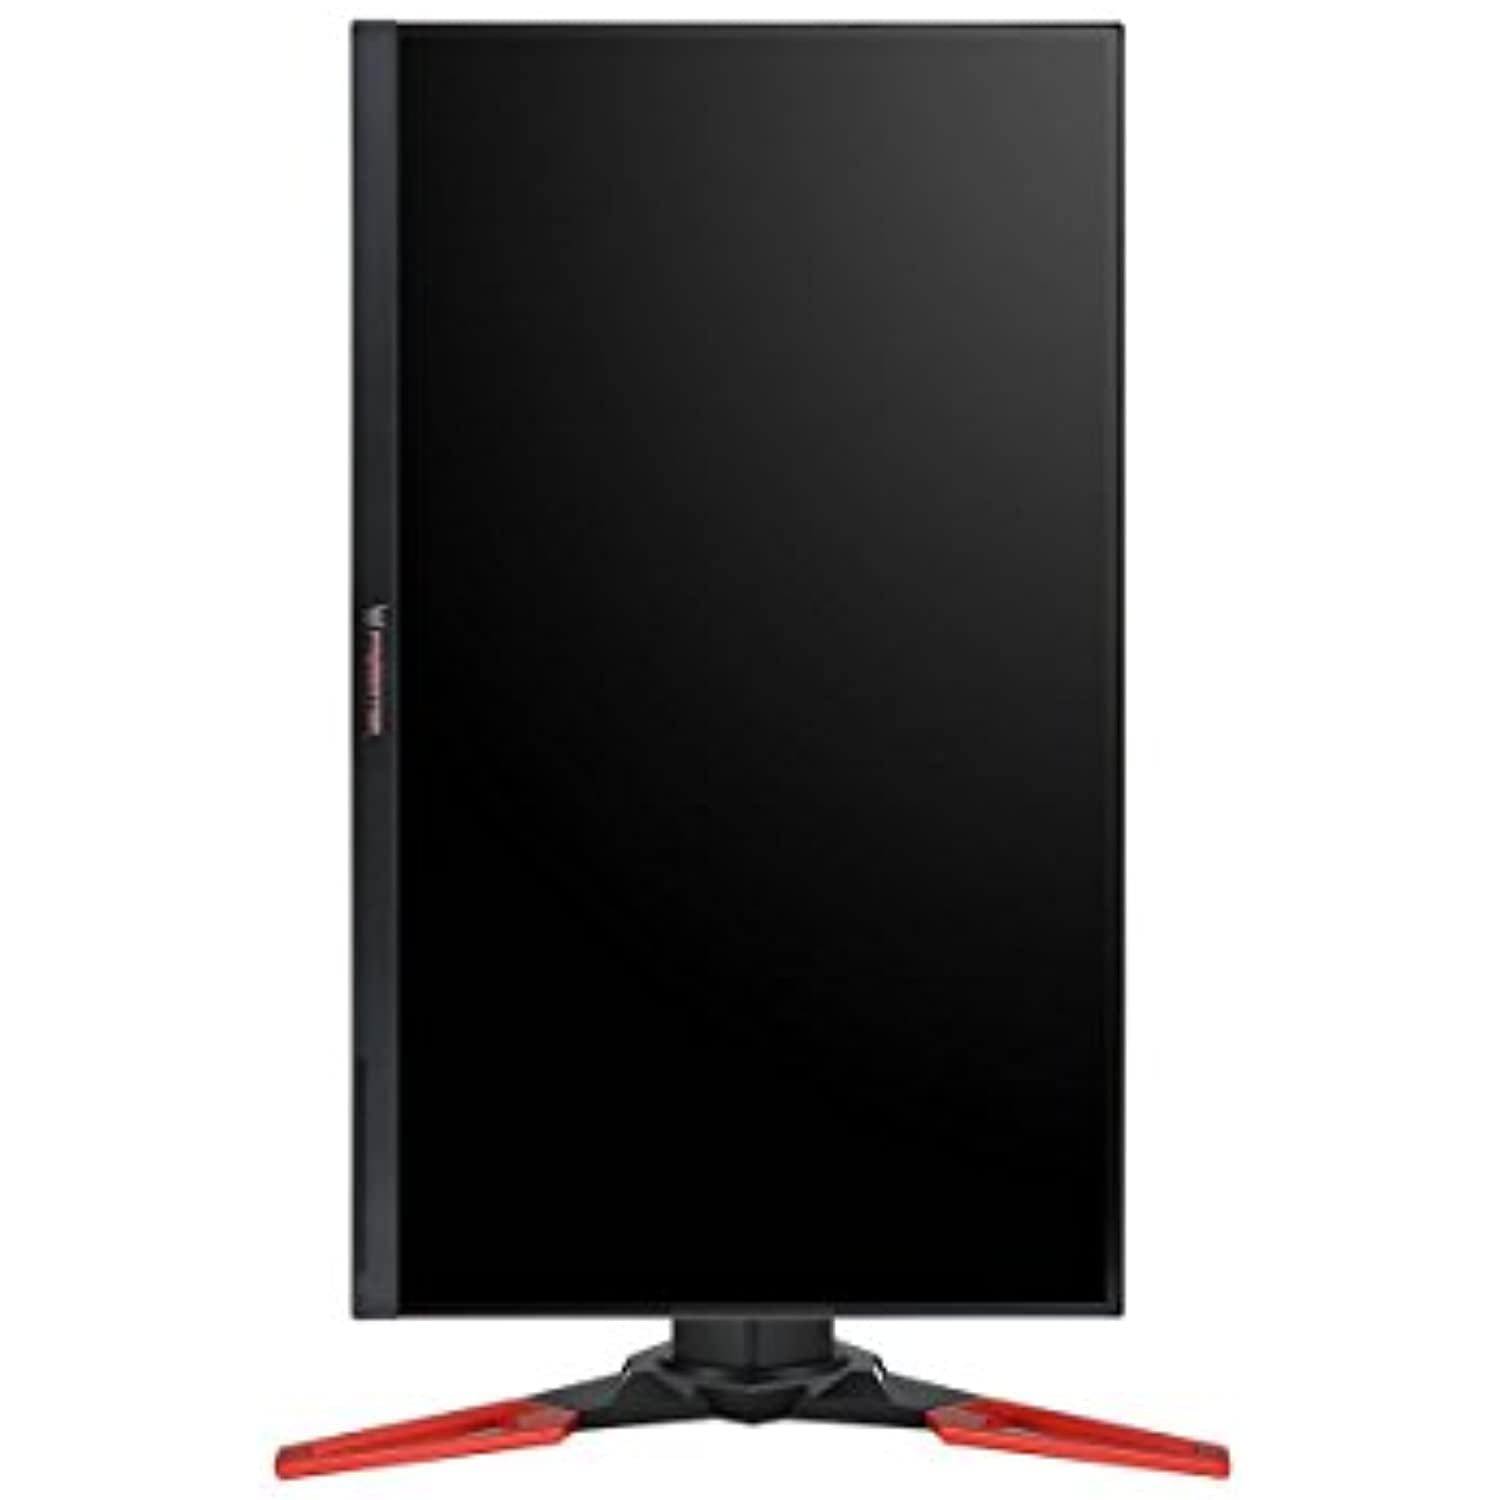 Acer Predator XB271HU bmiprz 27" WQHD (2560x1440) NVIDIA G-SYNC Display, (Display Port & HDMI Port, 144Hz) - Walmart.com